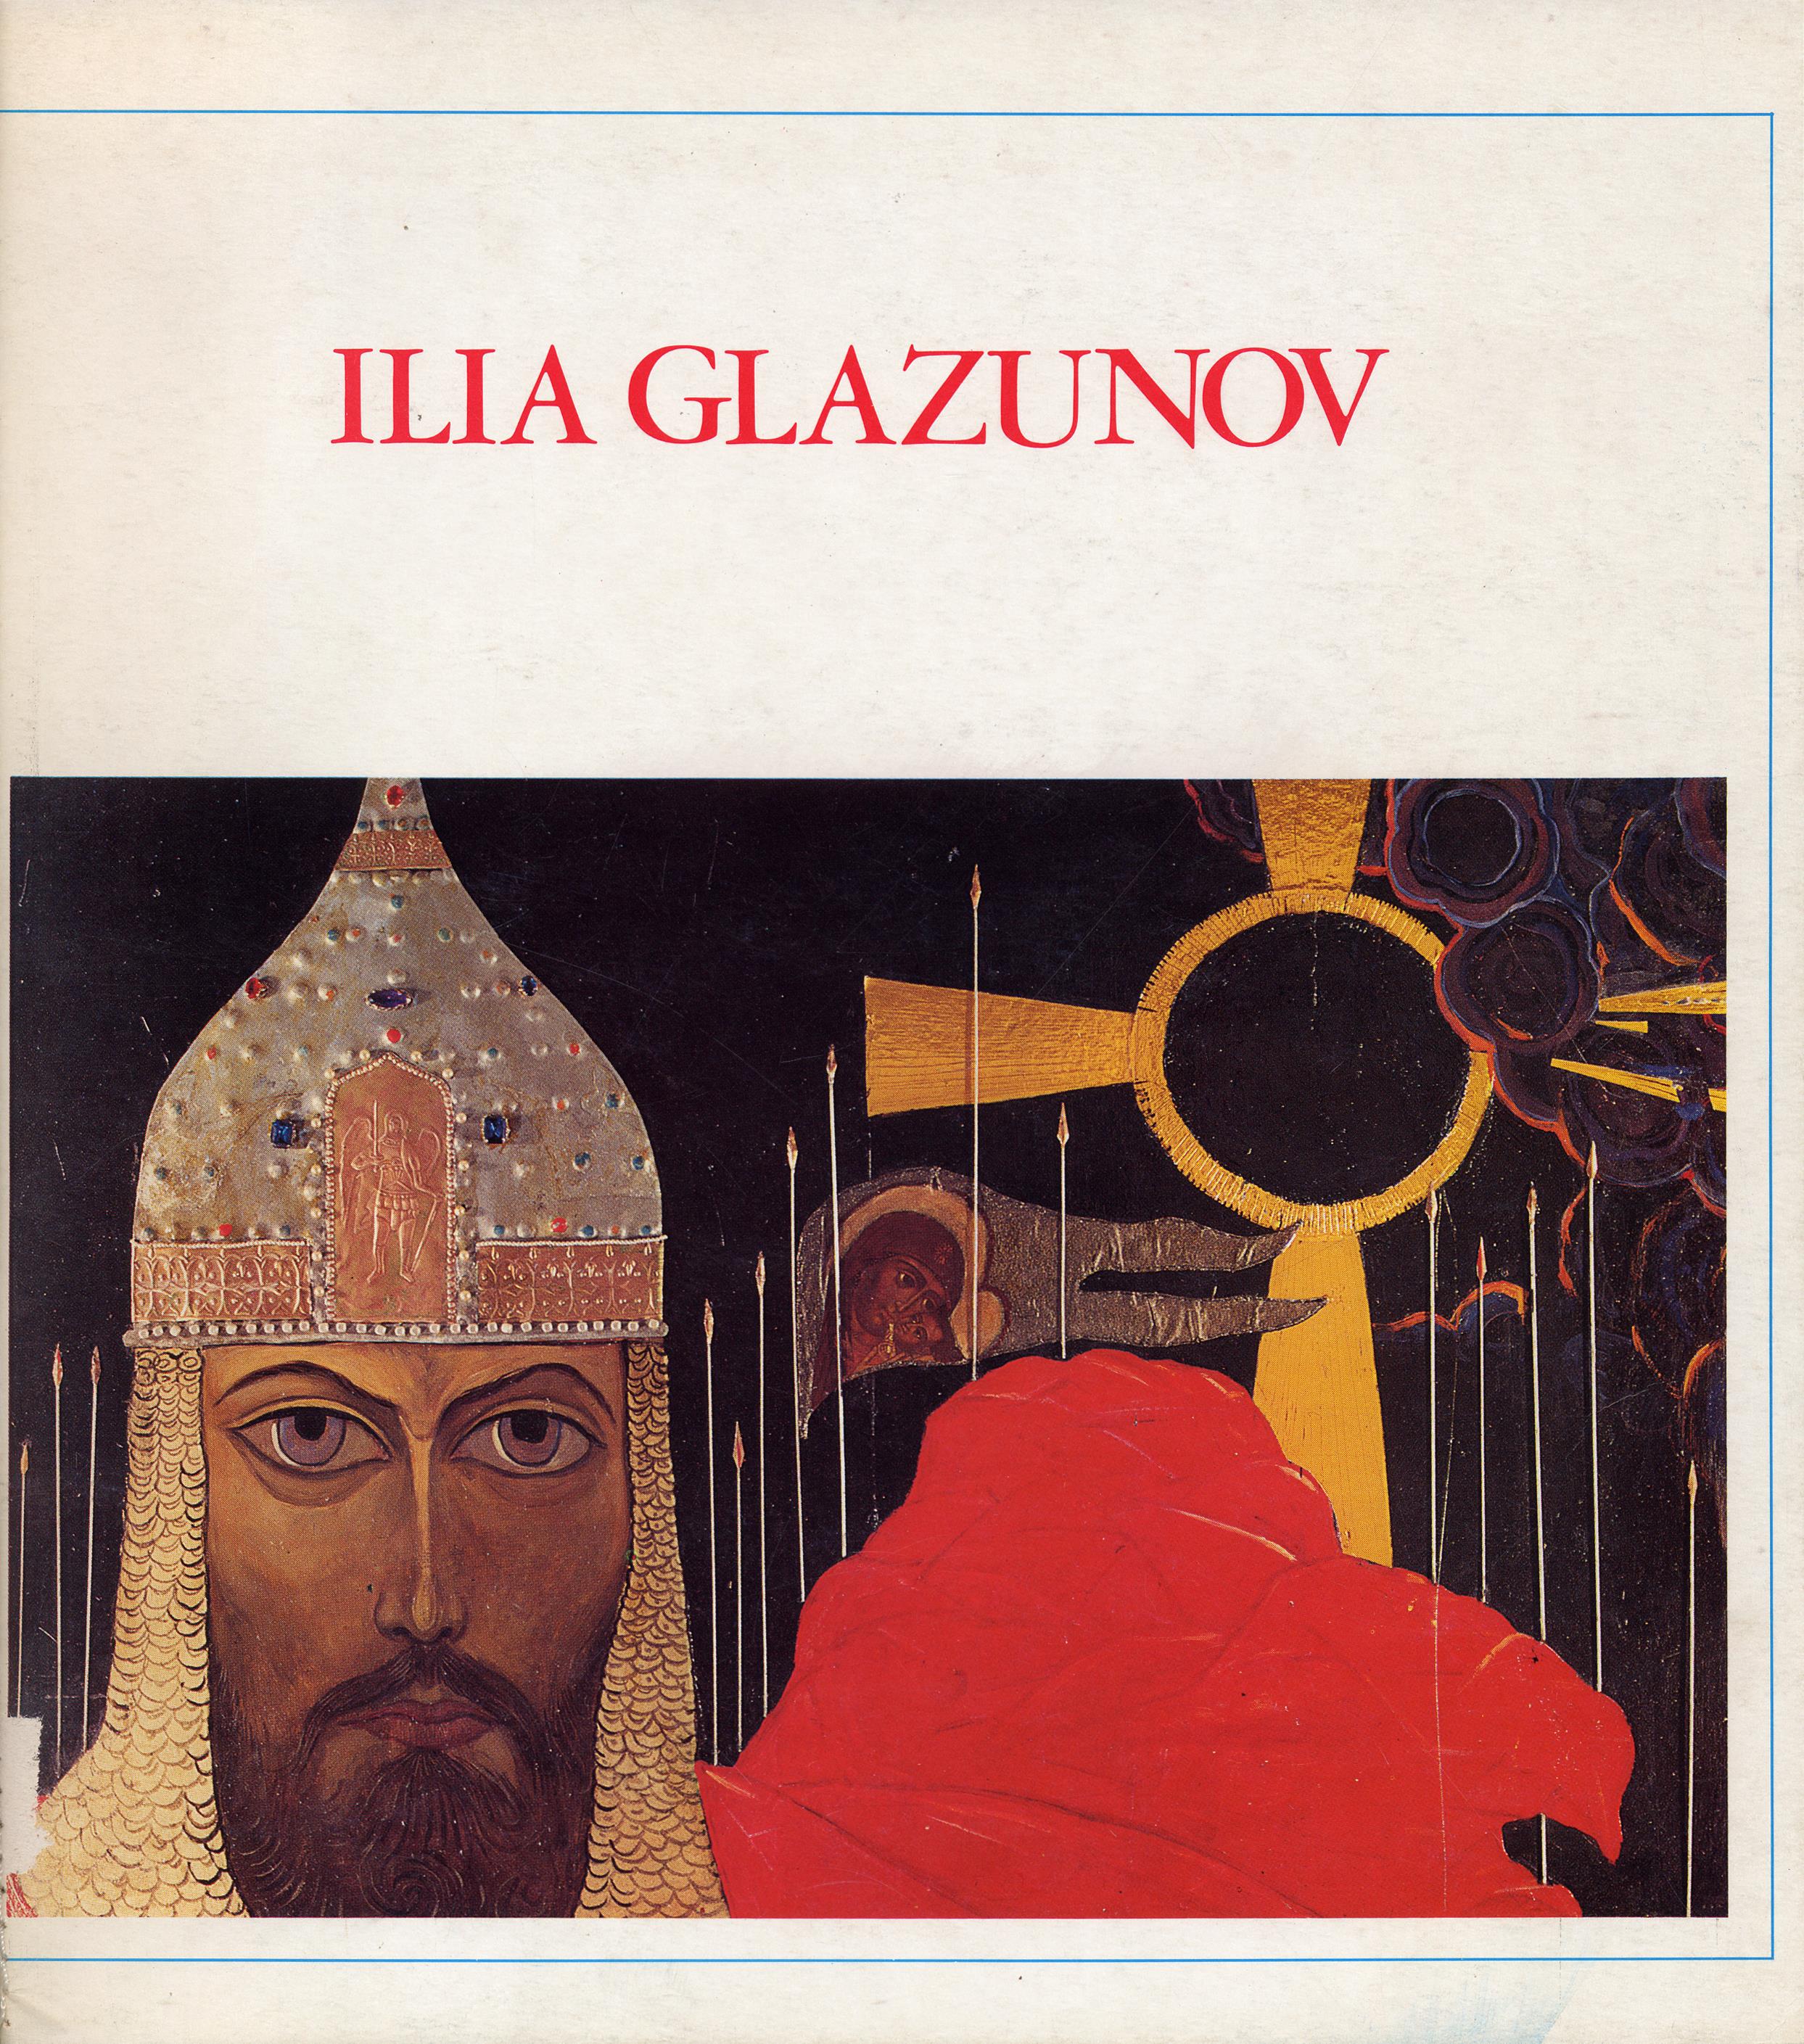 Ilia Glazunov